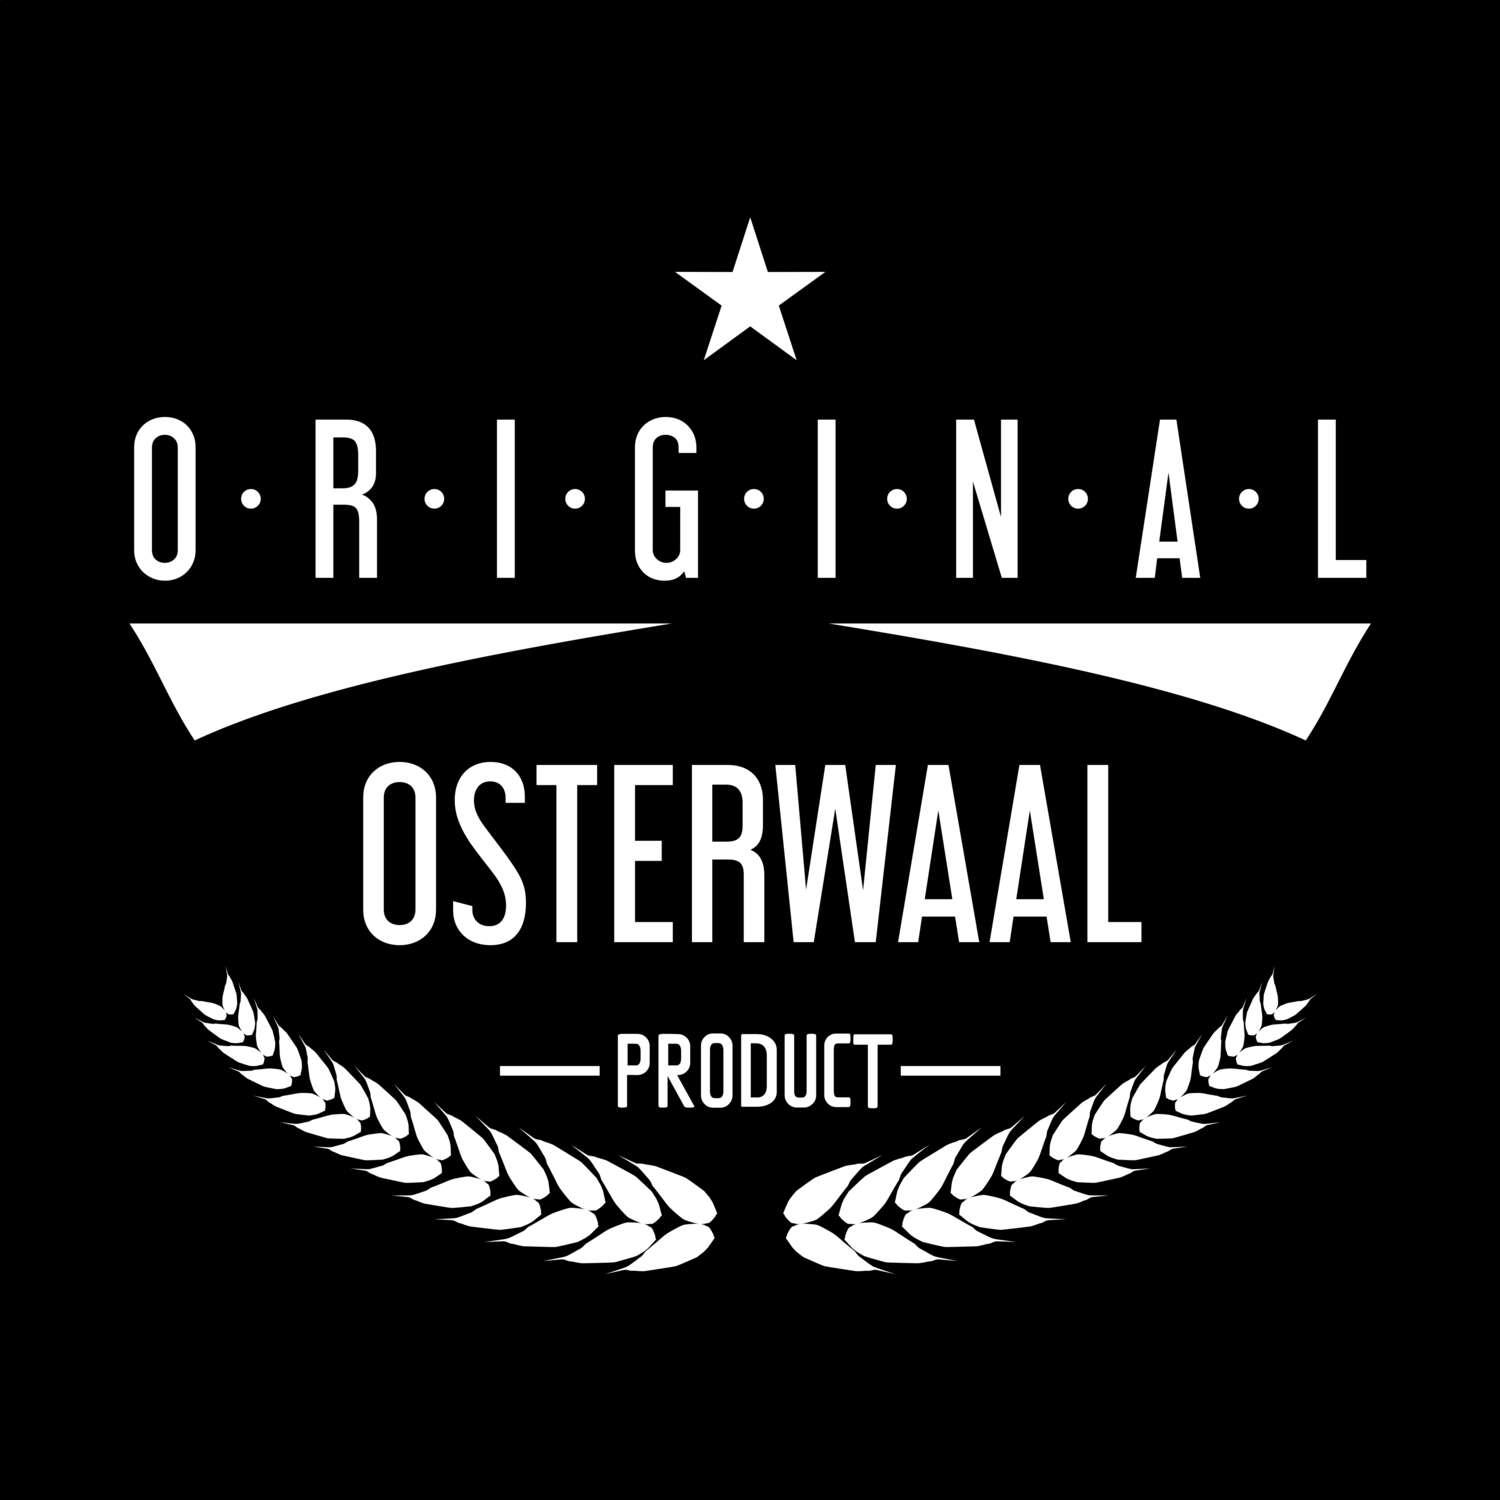 Osterwaal T-Shirt »Original Product«